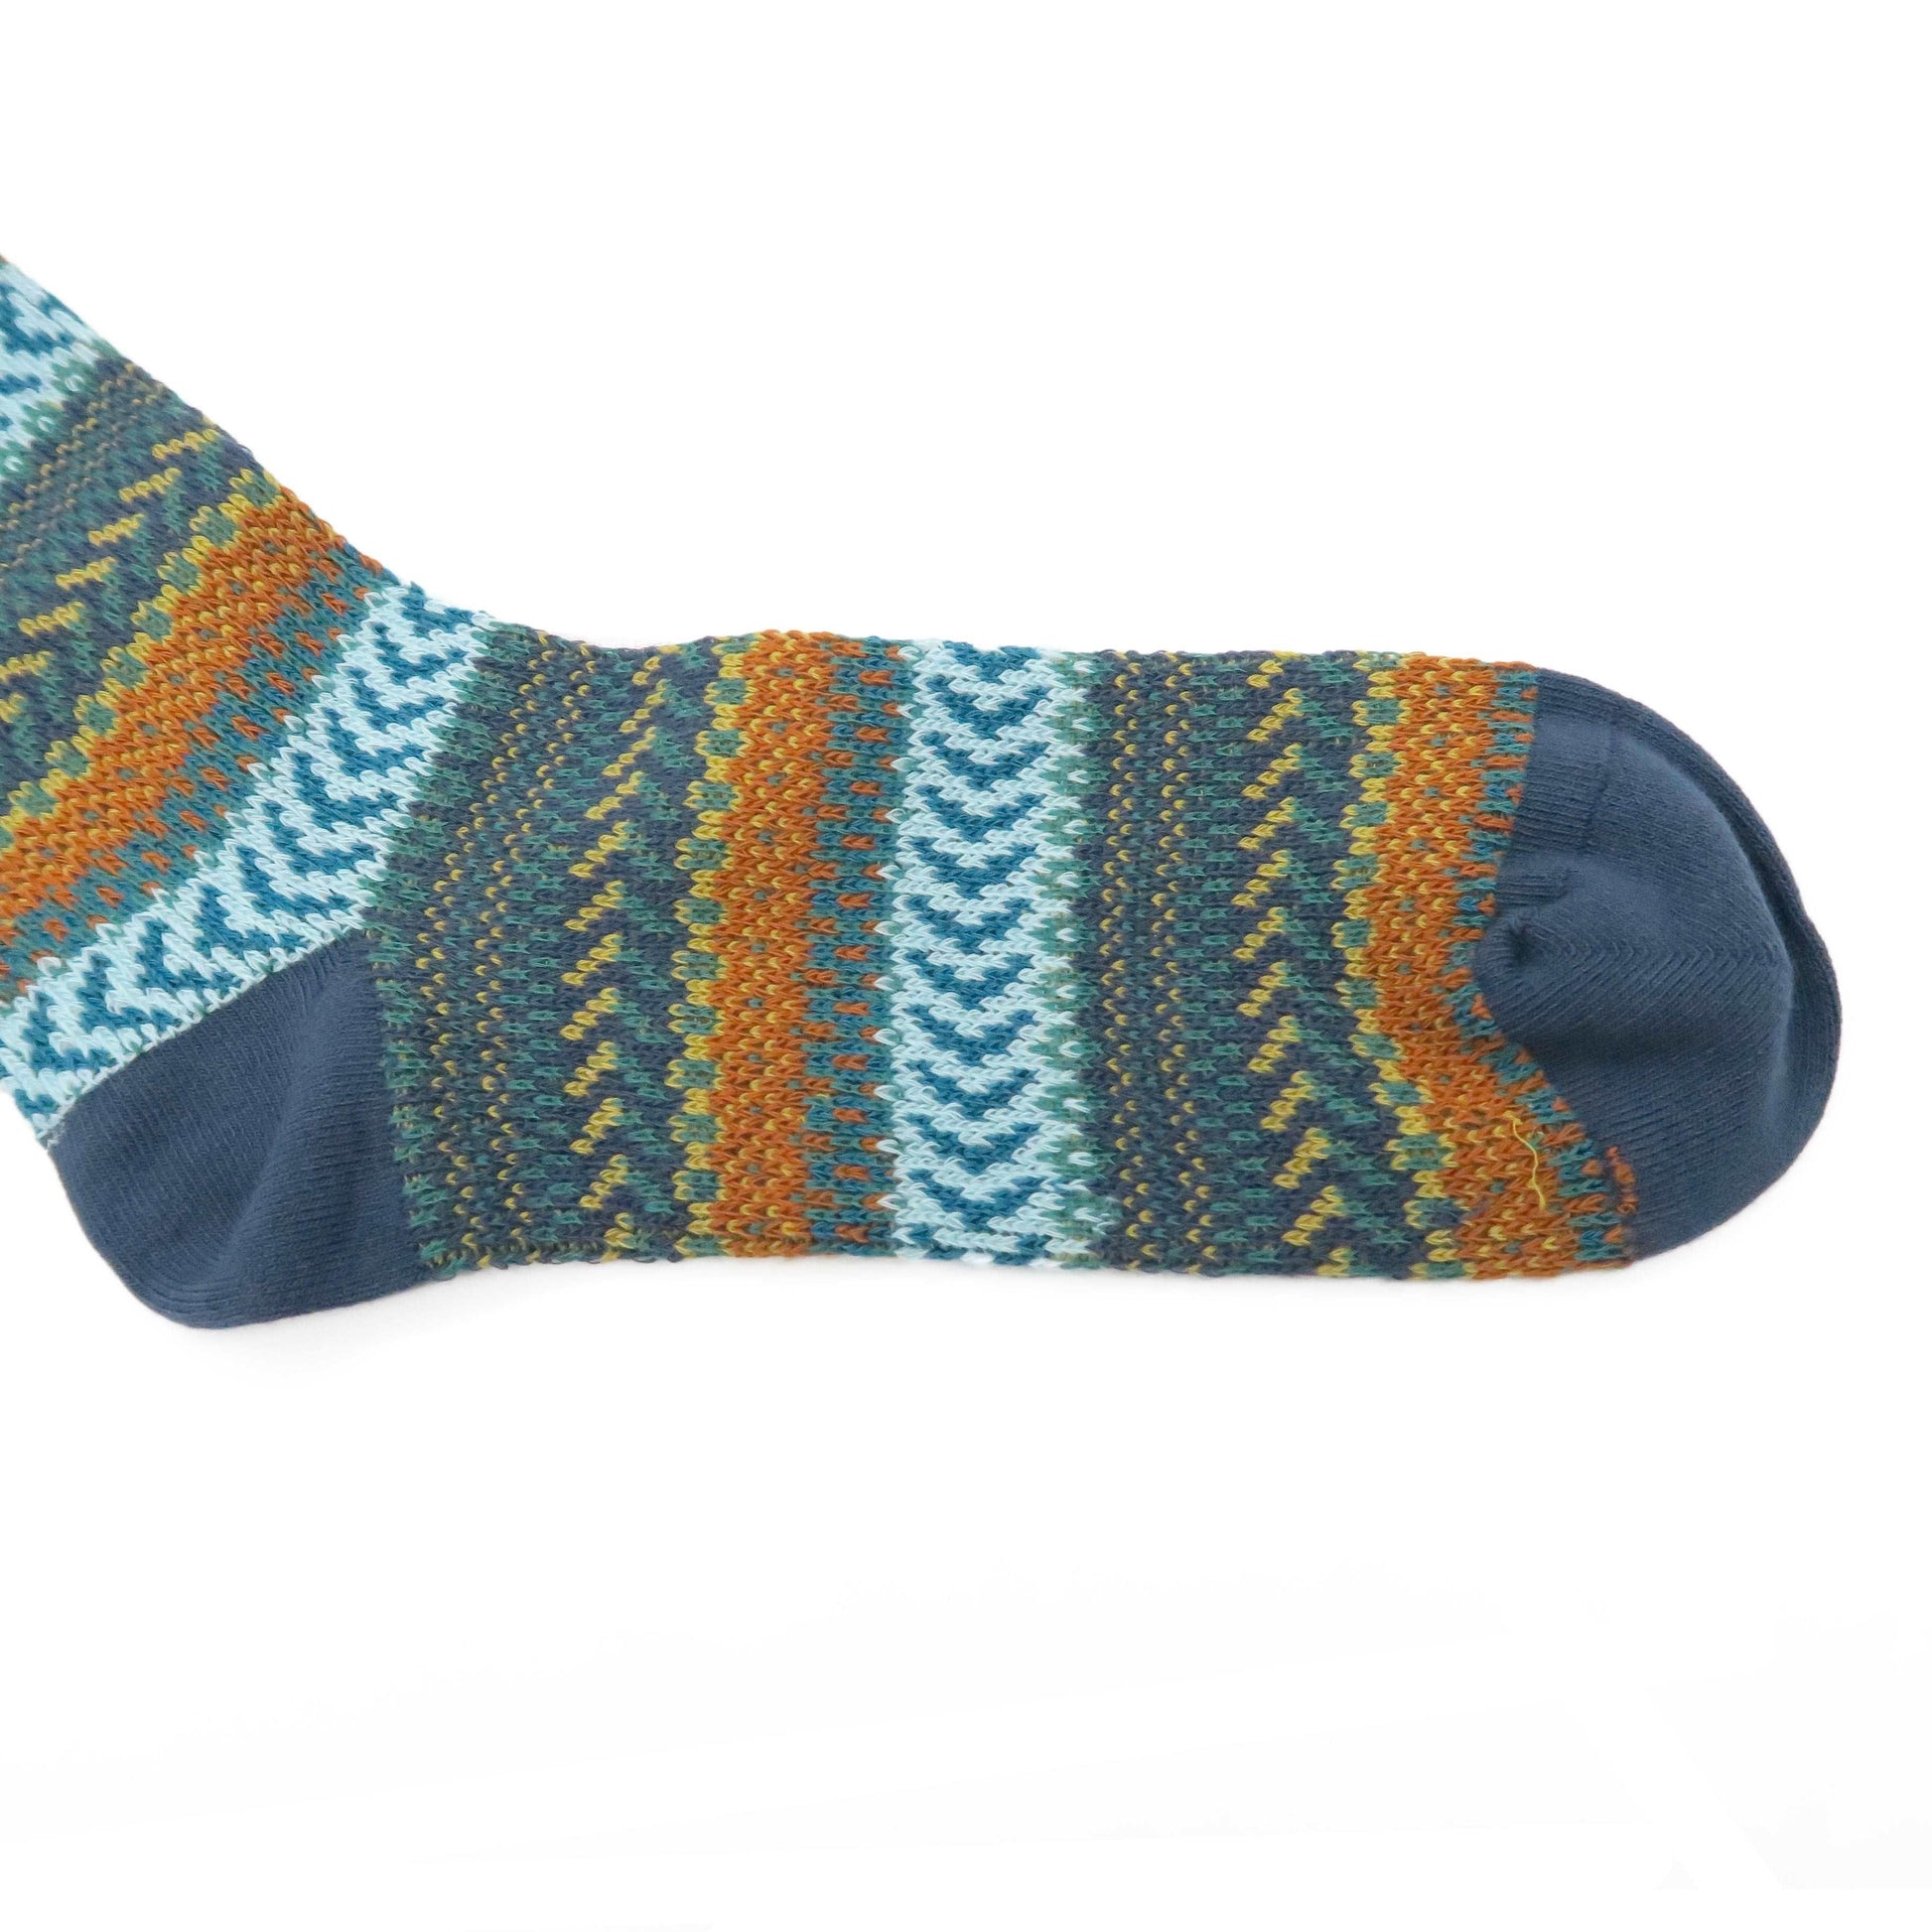 flecha sock - blue and green arrow stripy pattern unisex socks